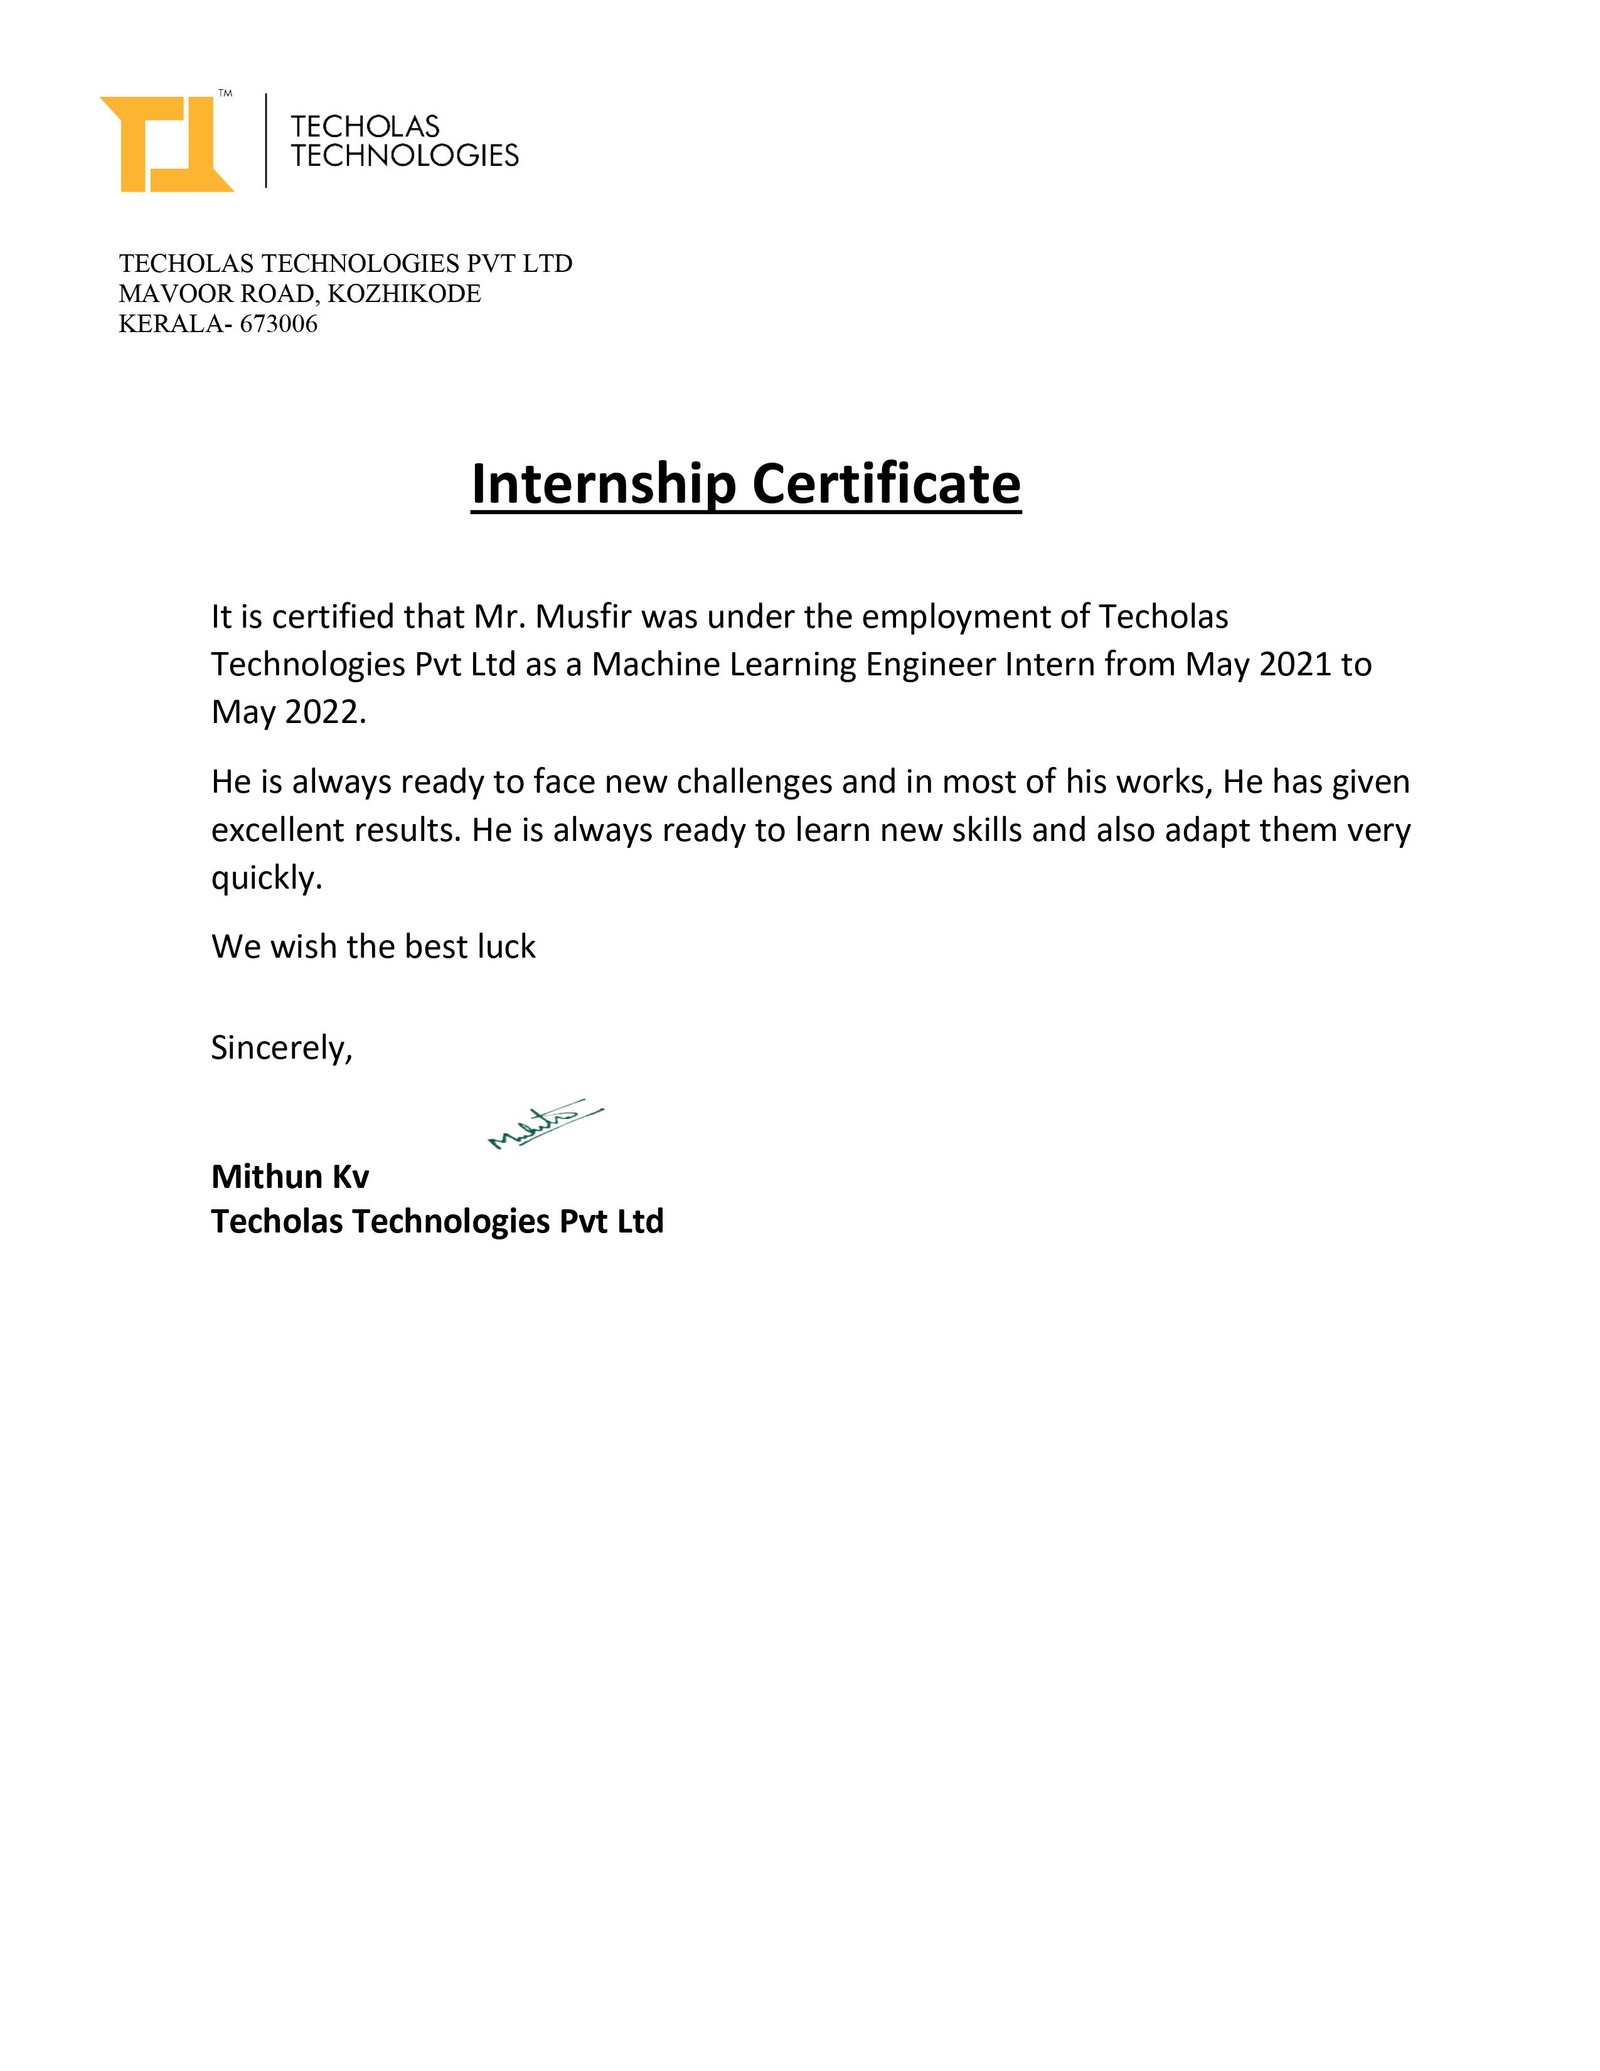 Business Analytics Internship Certificate